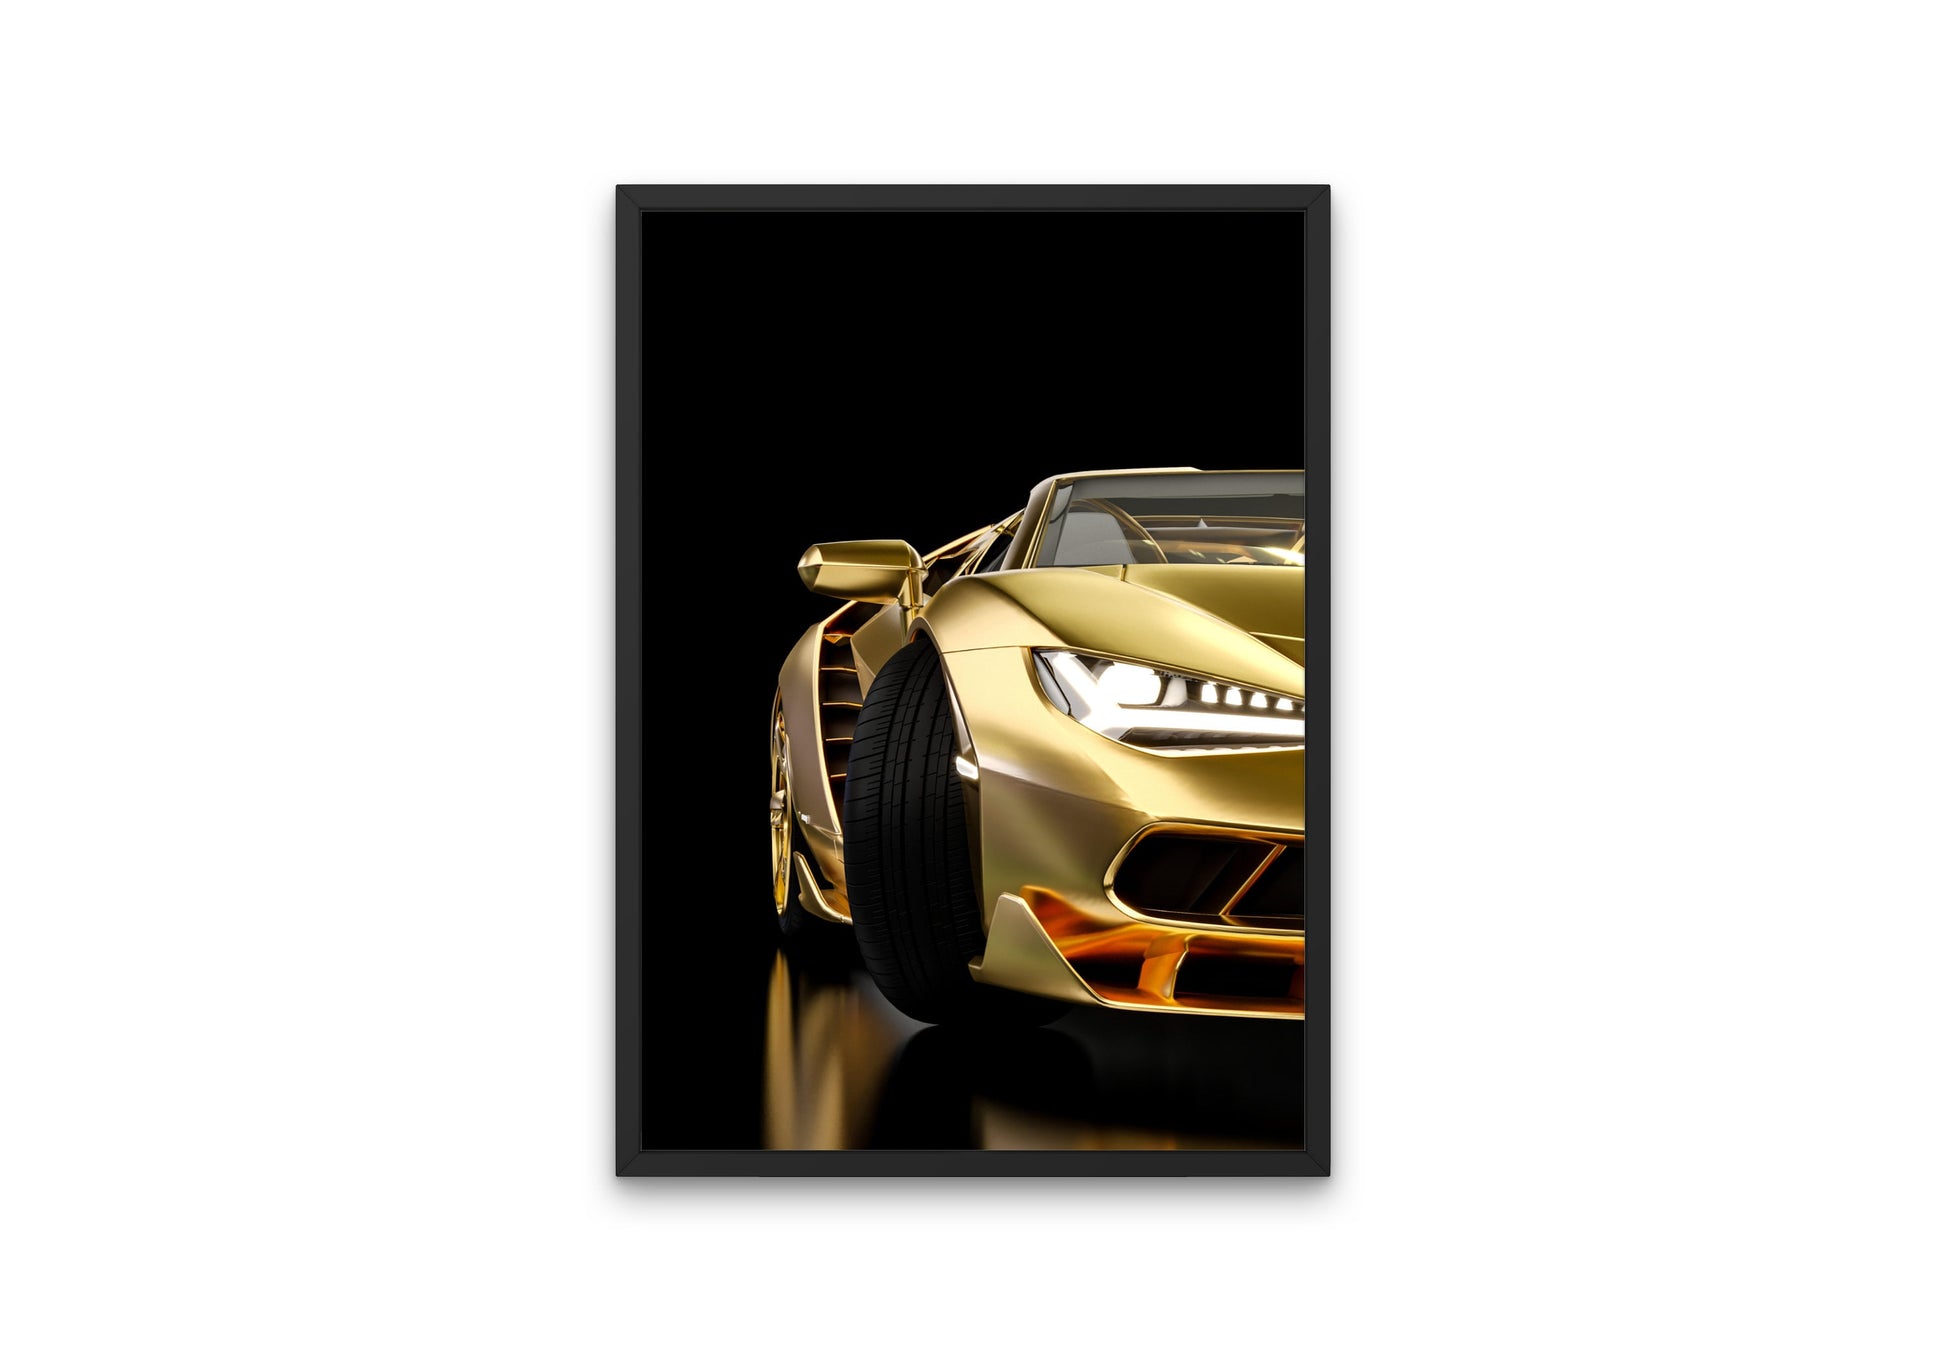 Golden Luxury Car Wall Art INSTANT DOWNLOAD, Racing Luxury Sports Car, Luxury Fashion Wall Art, Car Photo, Glam Automotive Décor